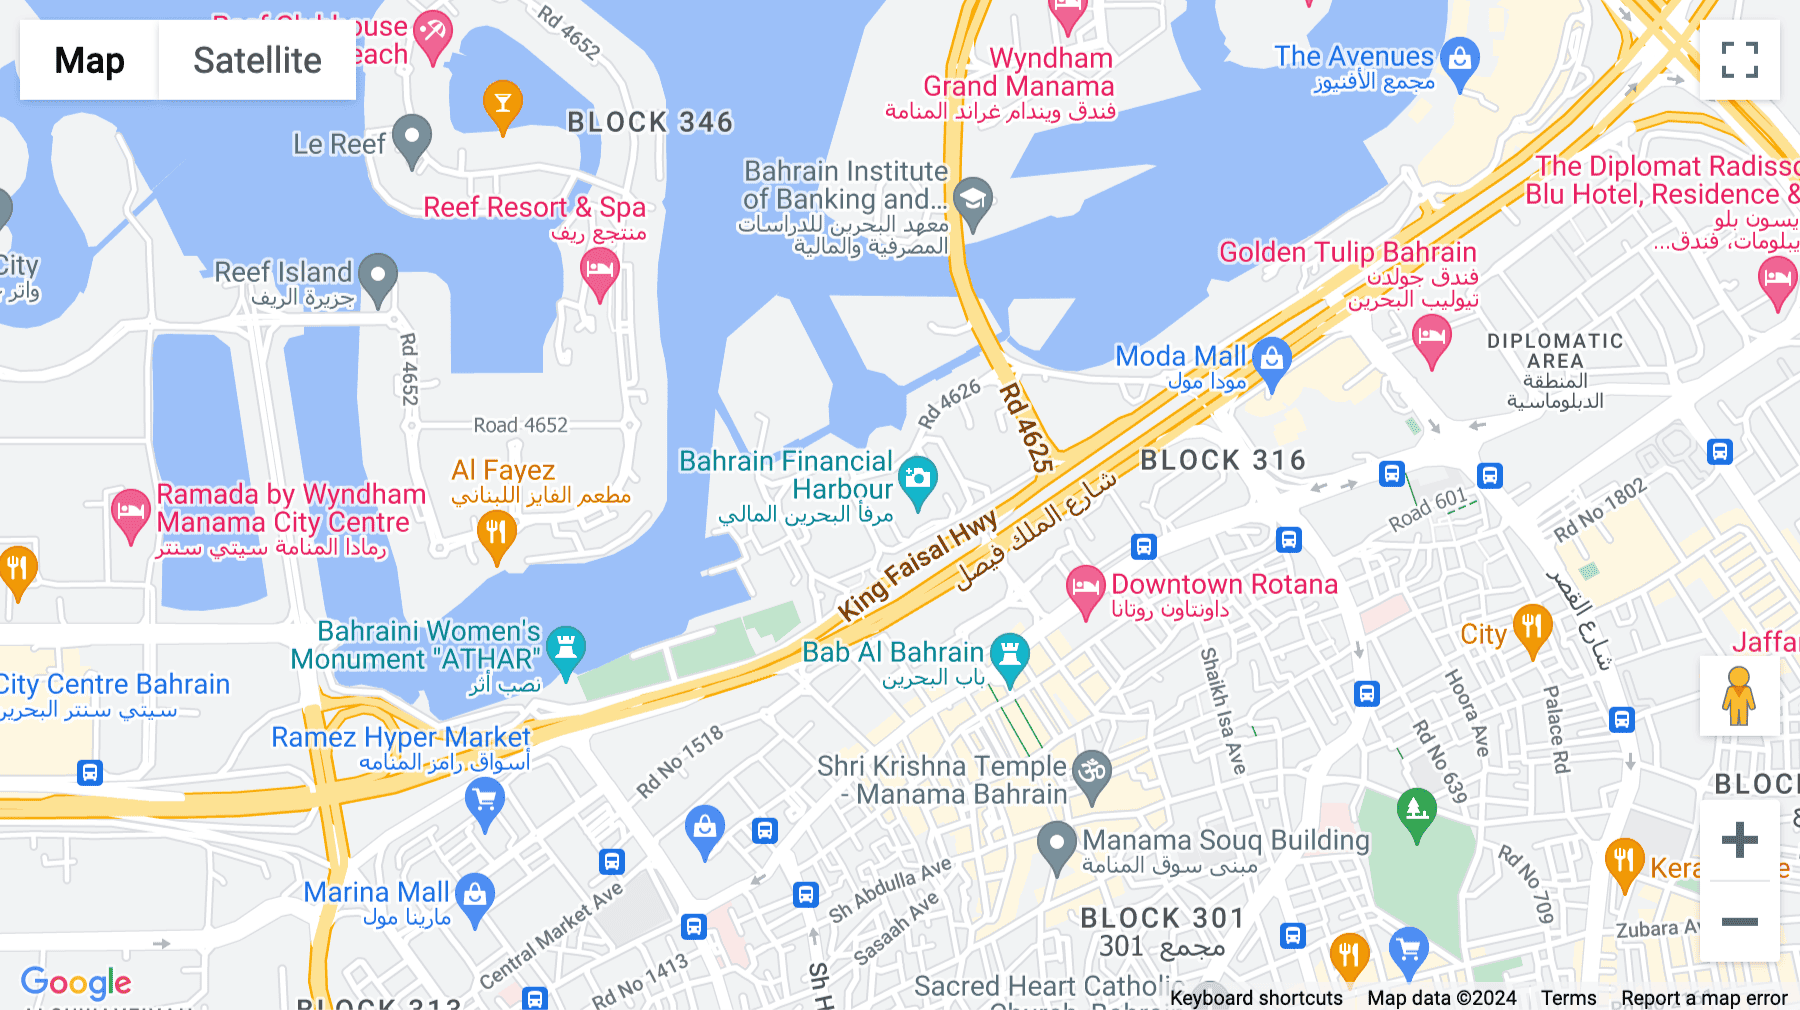 Click for interative map of Saya Tower, Bahrain Financial Harbour, Manama